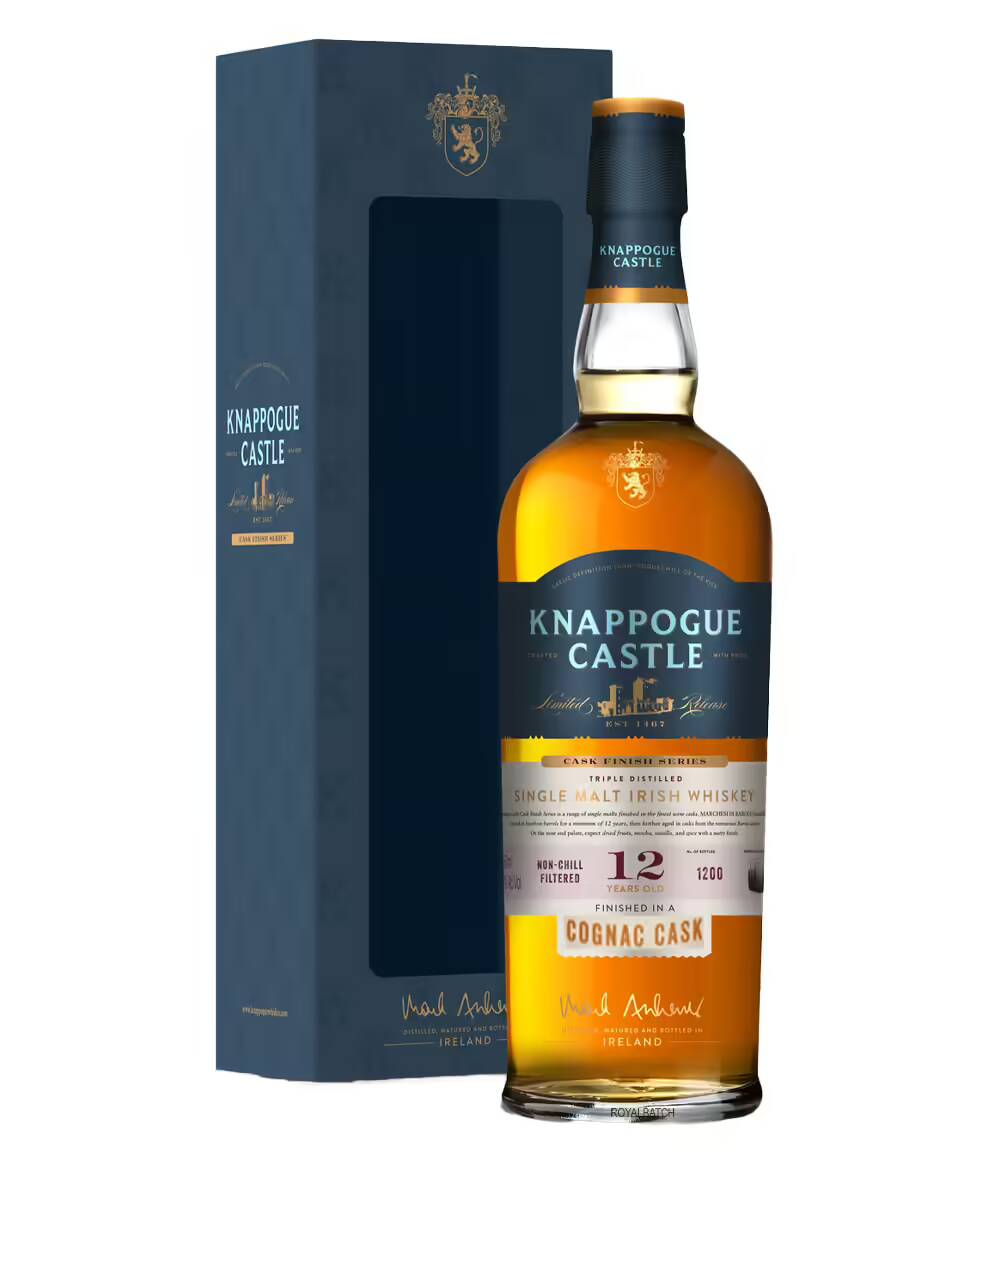 Knappogue Castle Cognac Cask 12 Year Old Single Malt Irish Whiskey